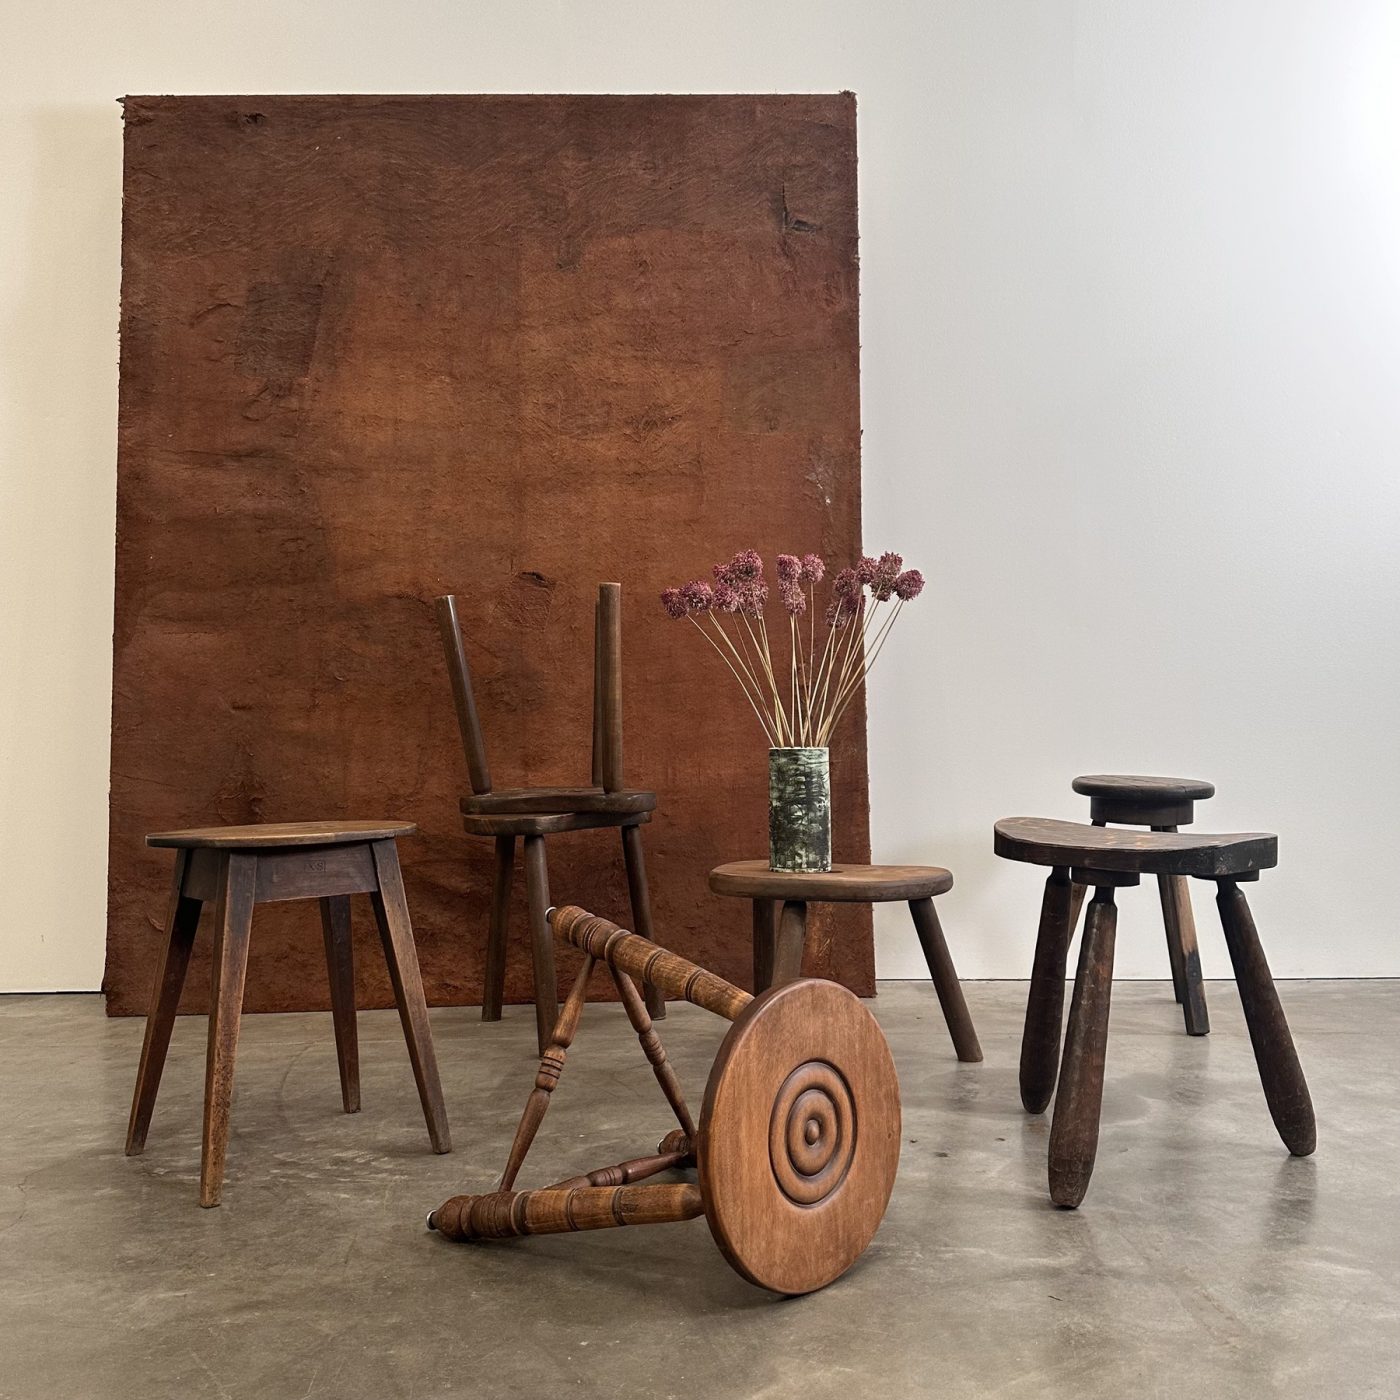 objet-vagabond-stool-collection0001